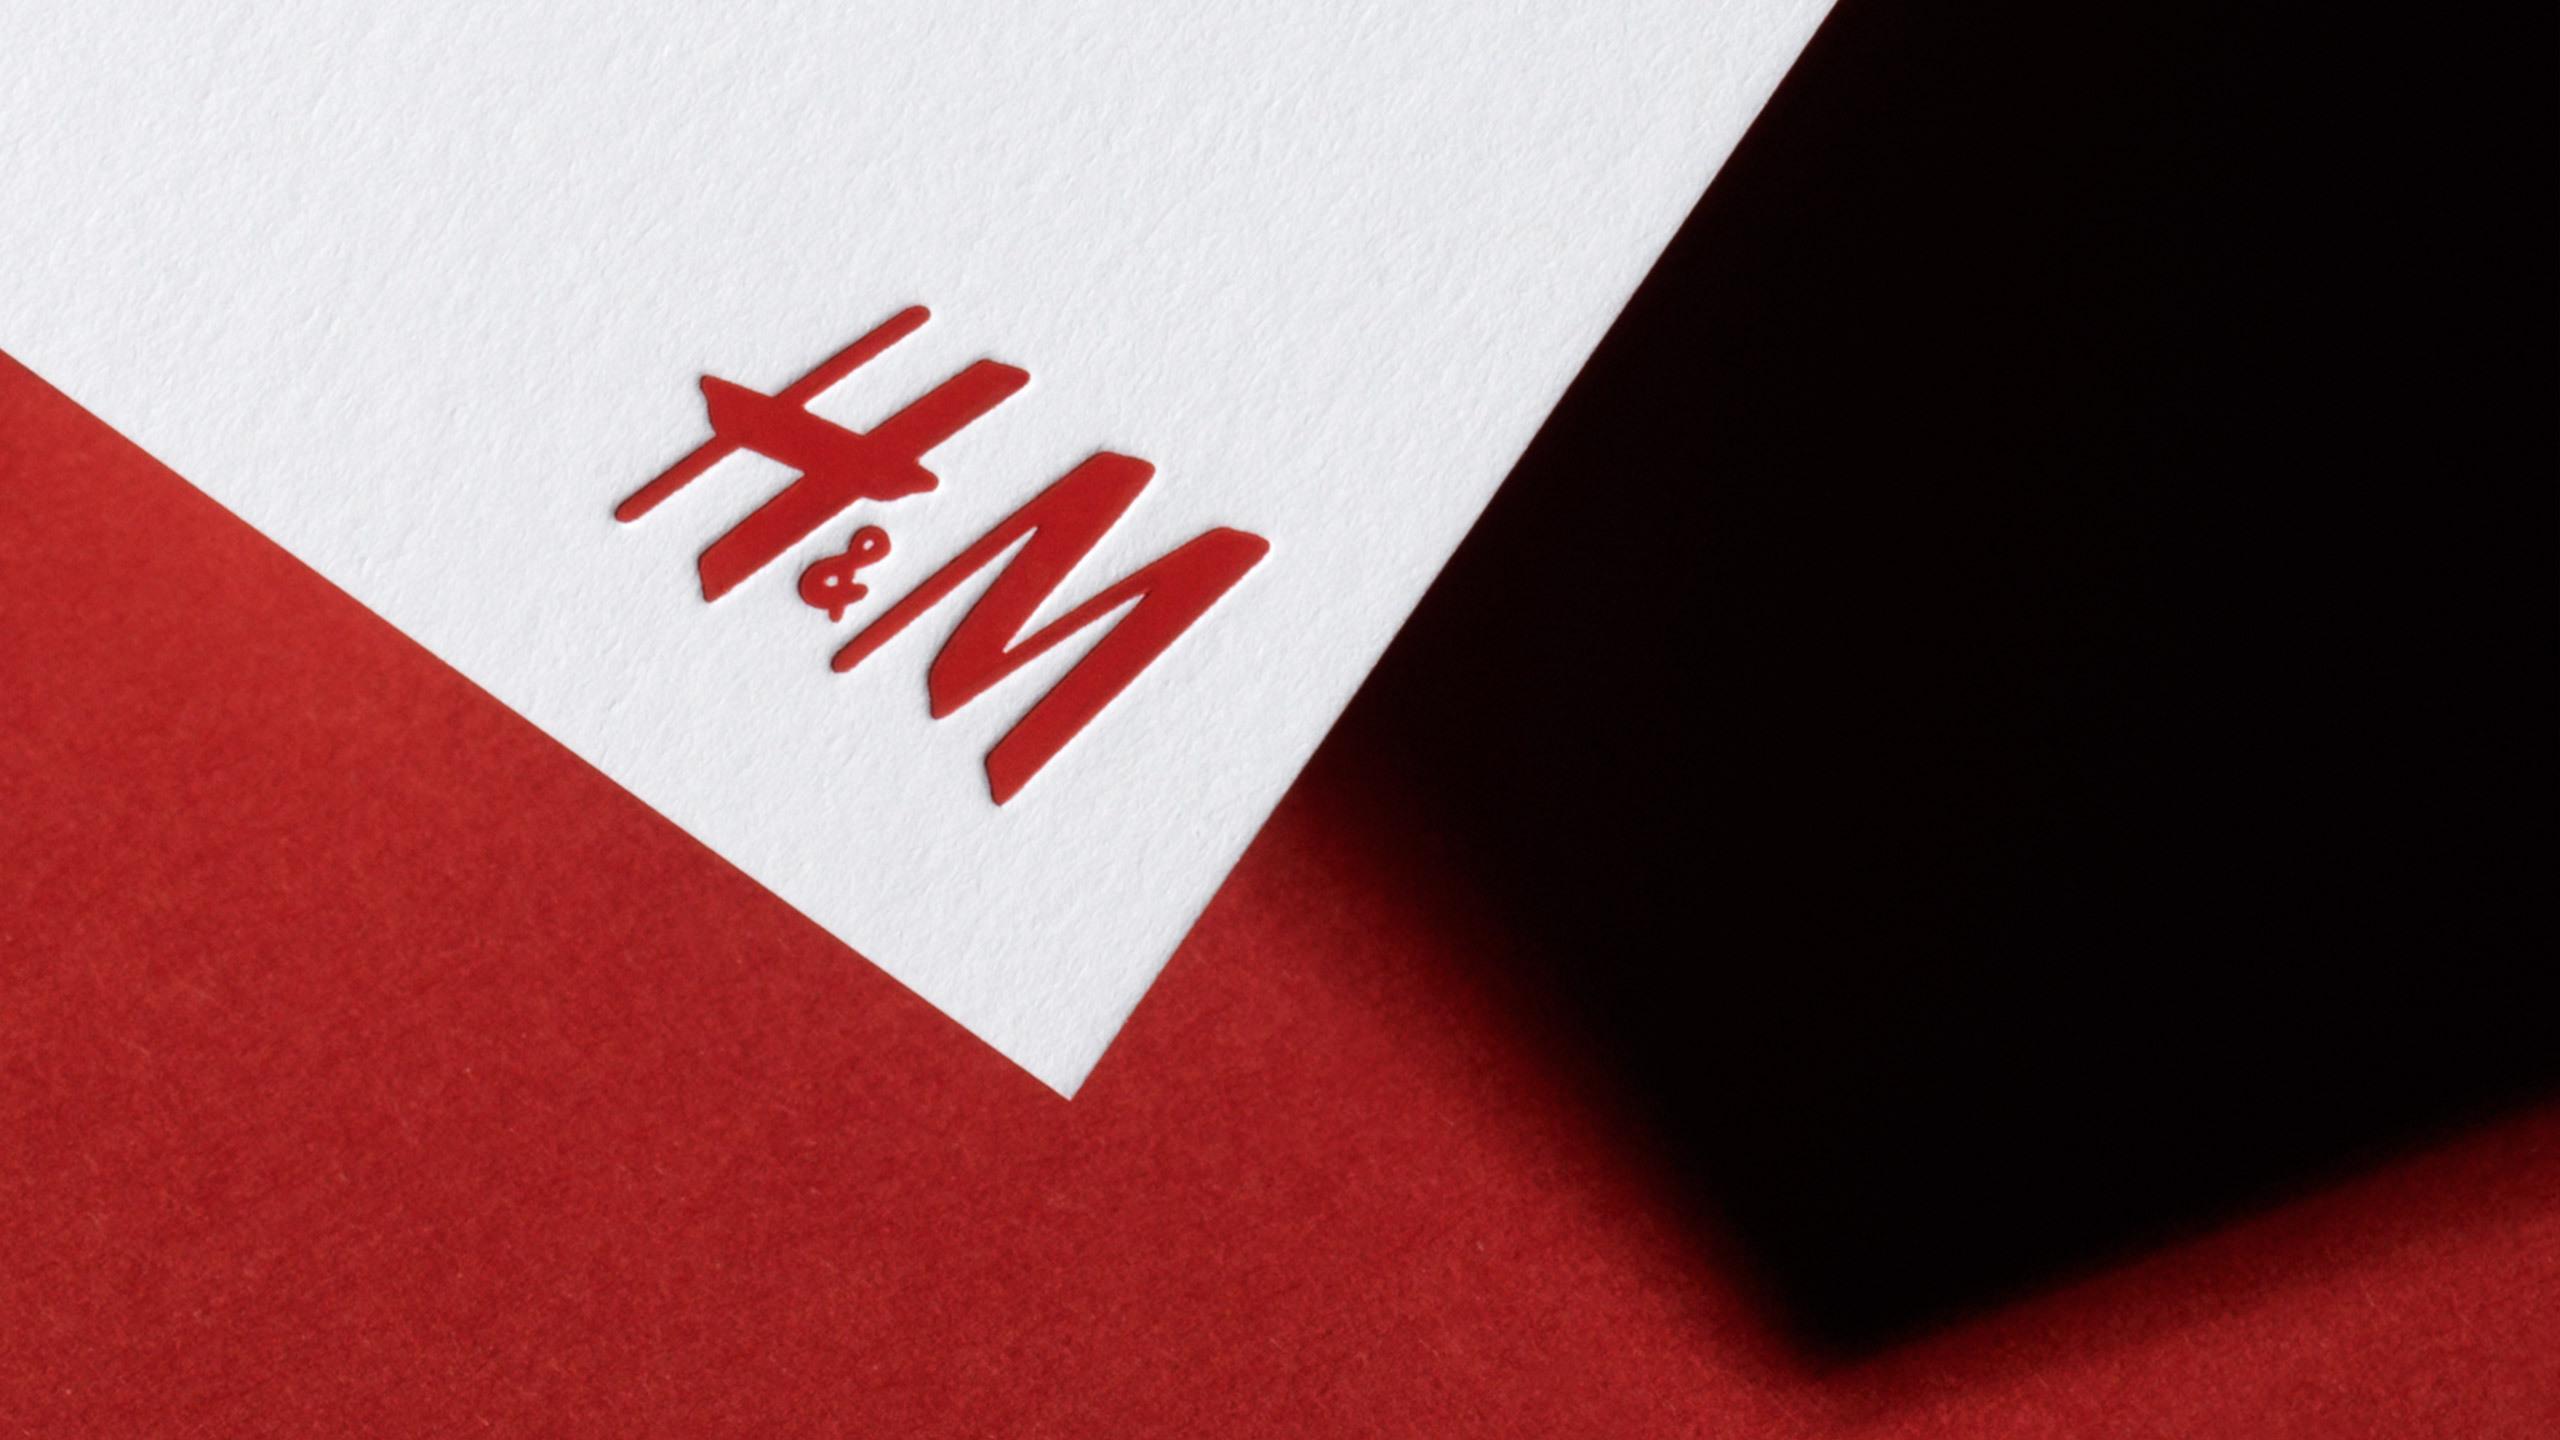 H&M Full Hd Wallpaper 4k